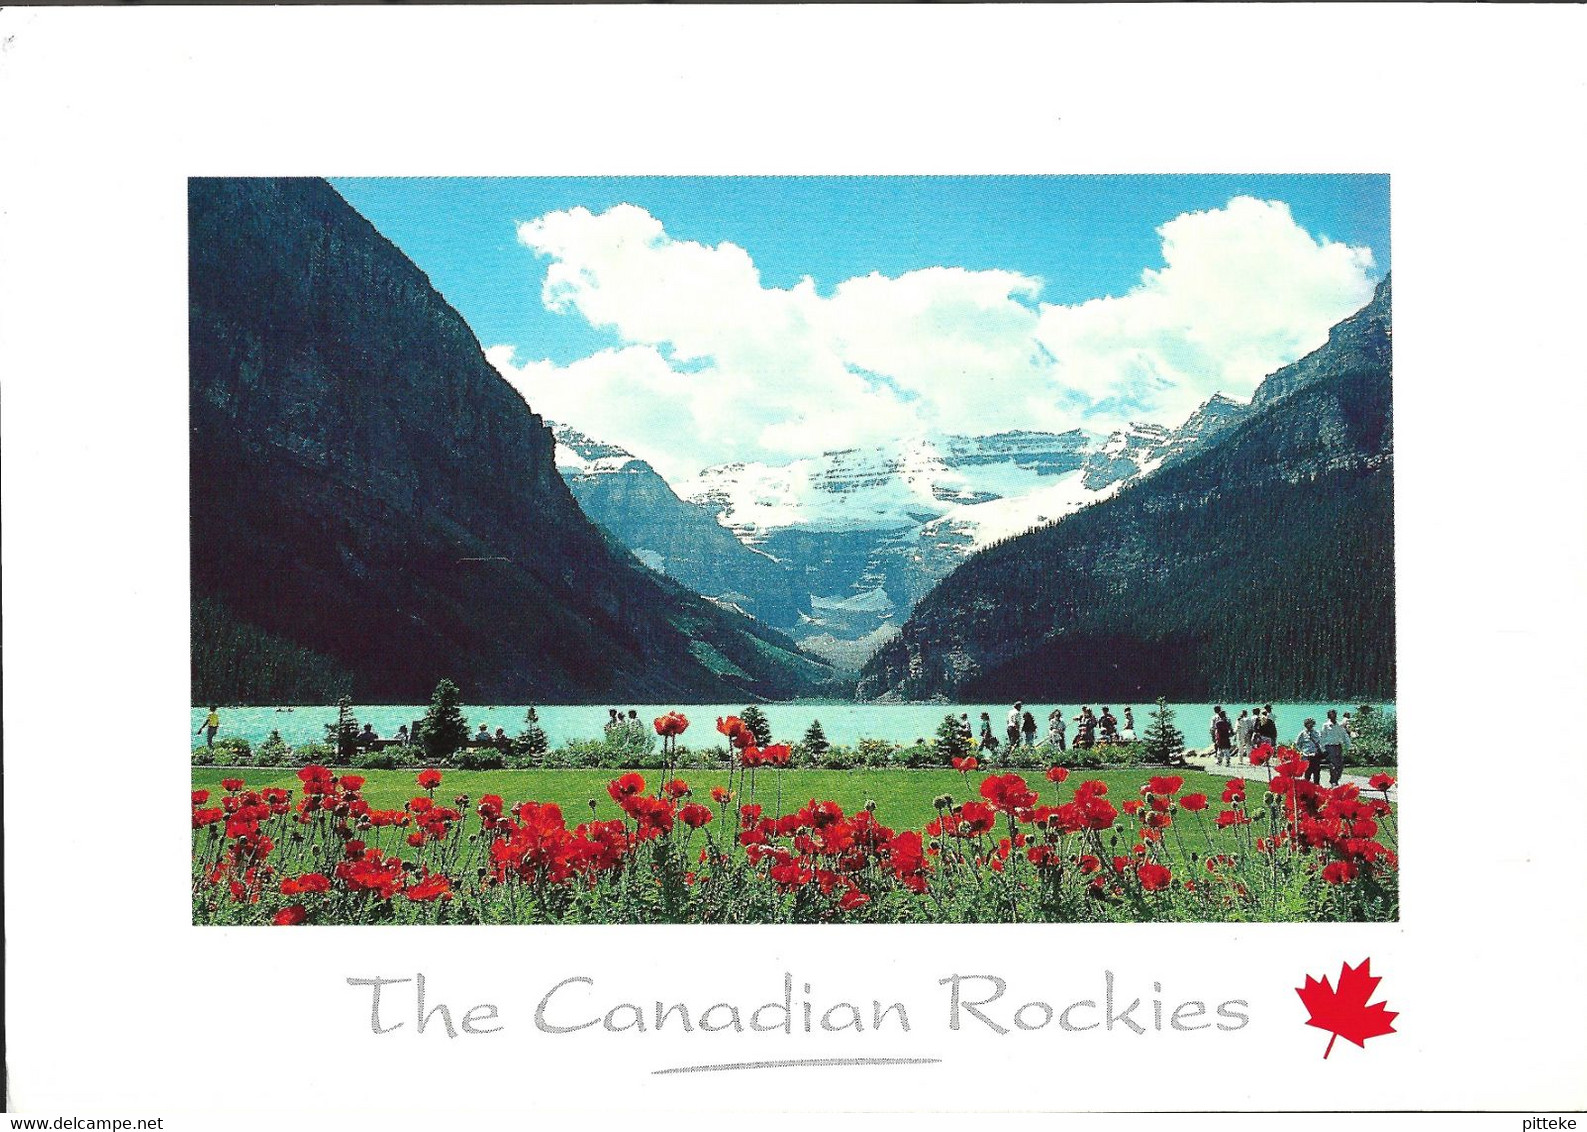 The Canadian Rockies - Lake Louise